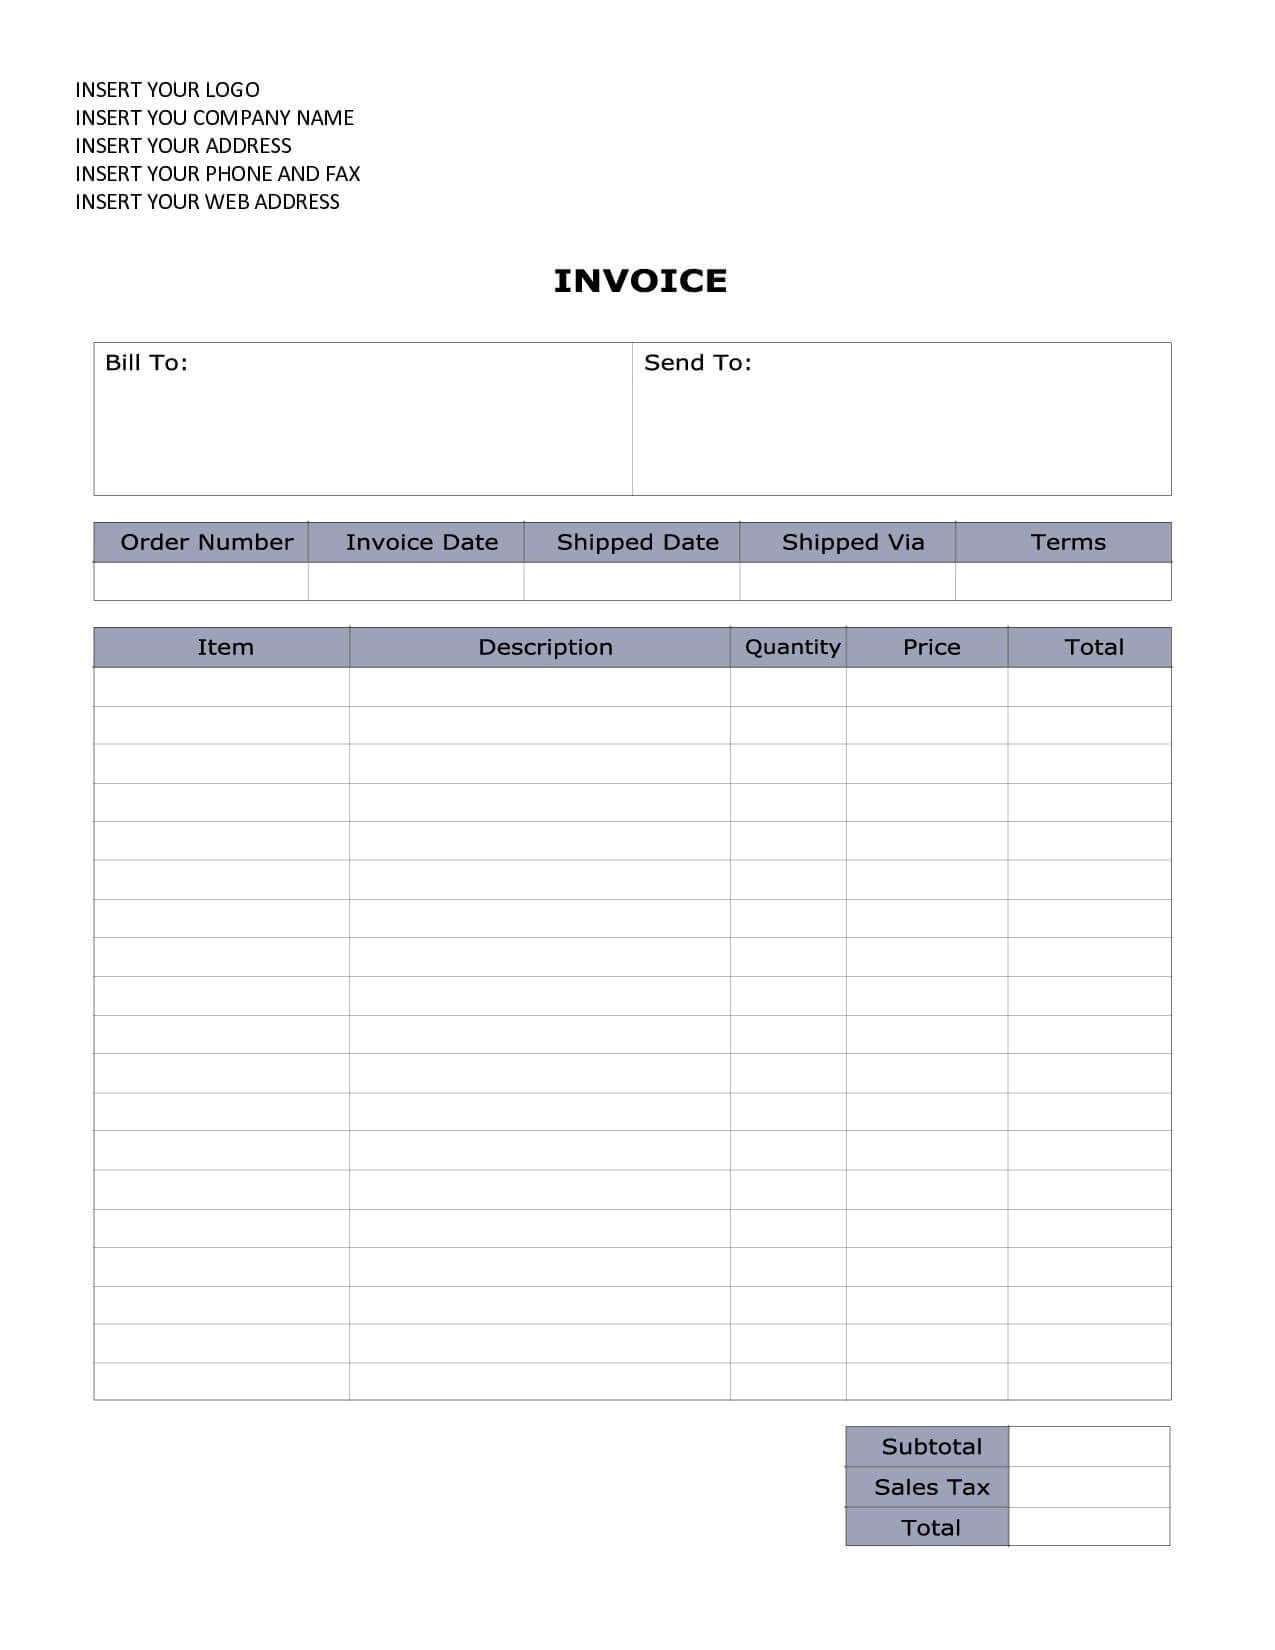 Sample Service Invoice Template Microsoft Word Sixpjawe